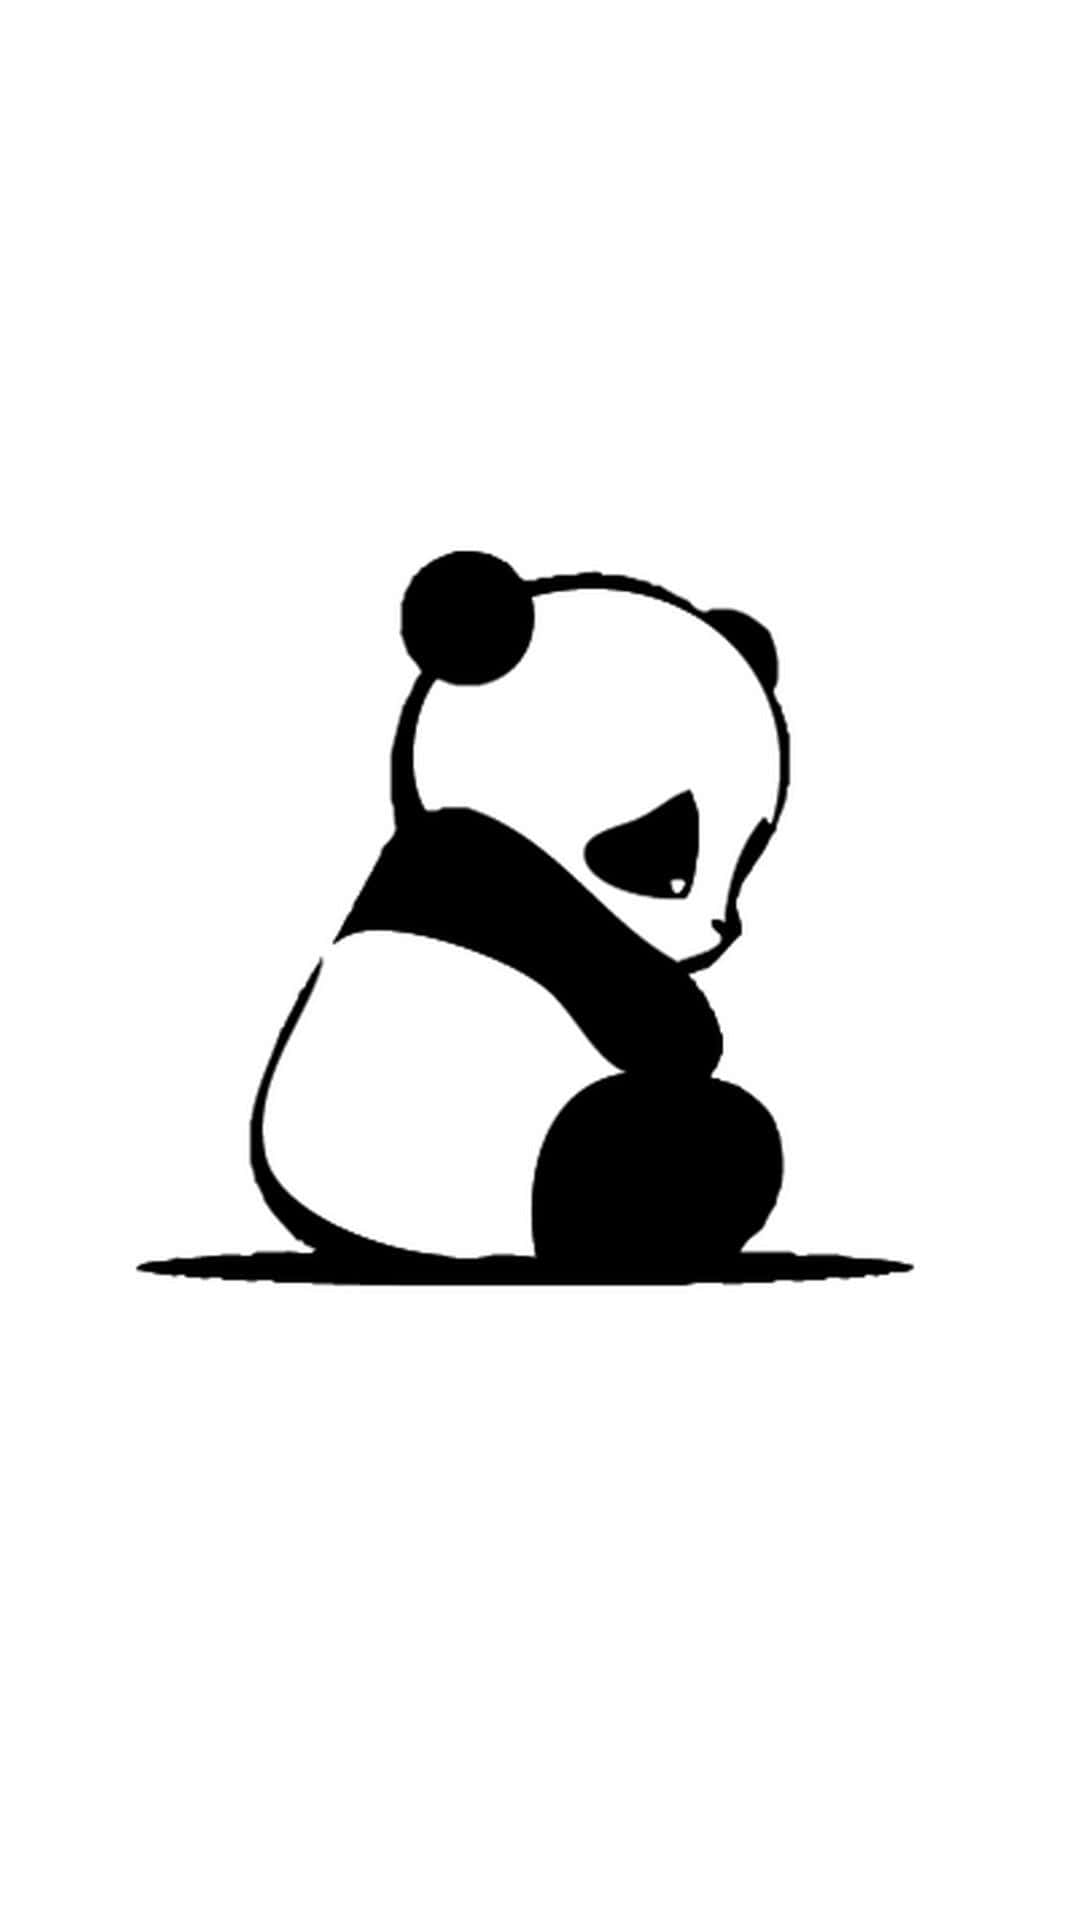 A cute panda eating bamboo in its natural habitat